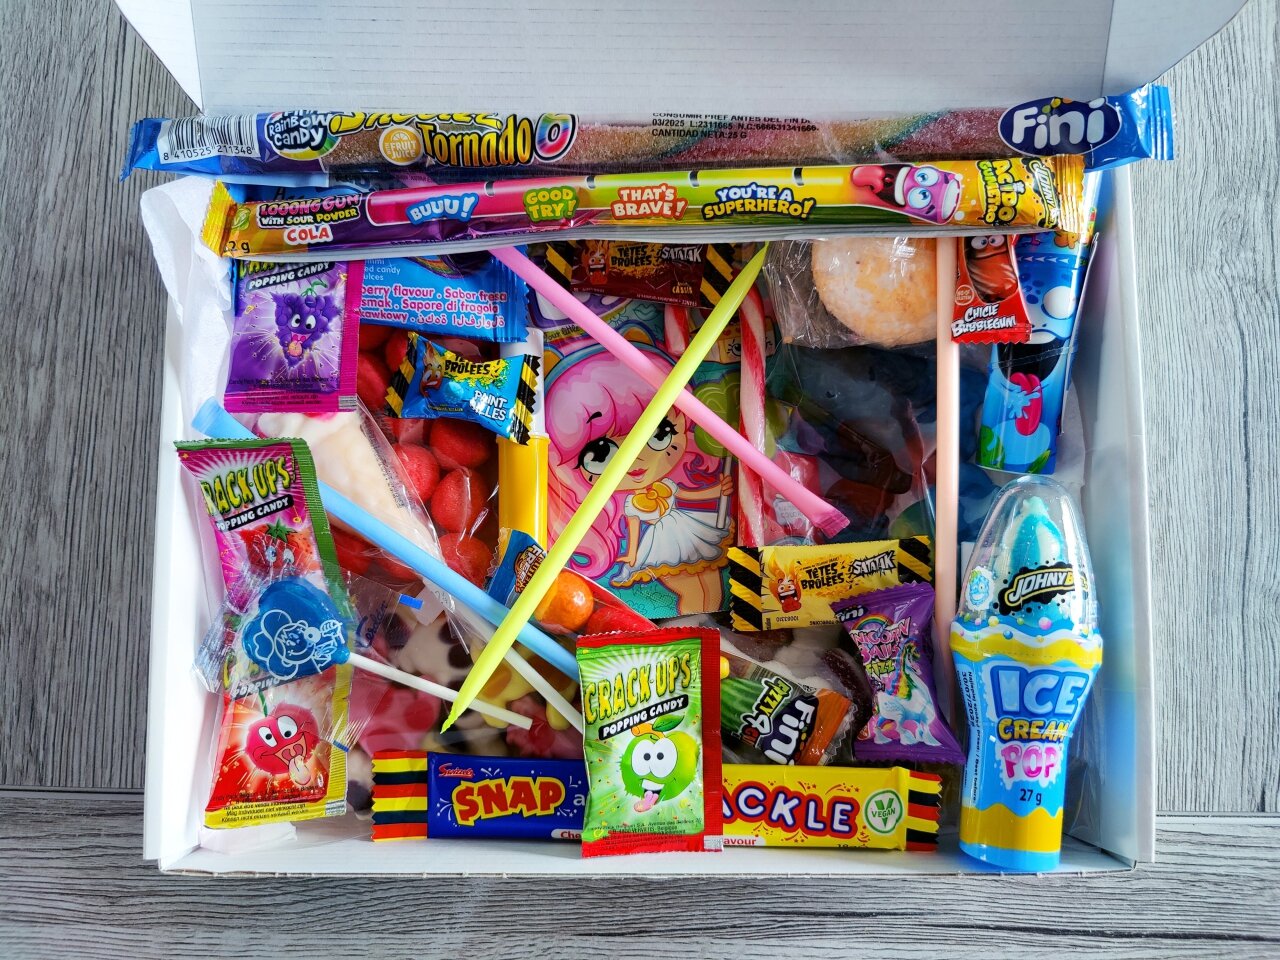 Assortiment de bonbons rétro - Box bonbons d'antan - Confiseries d